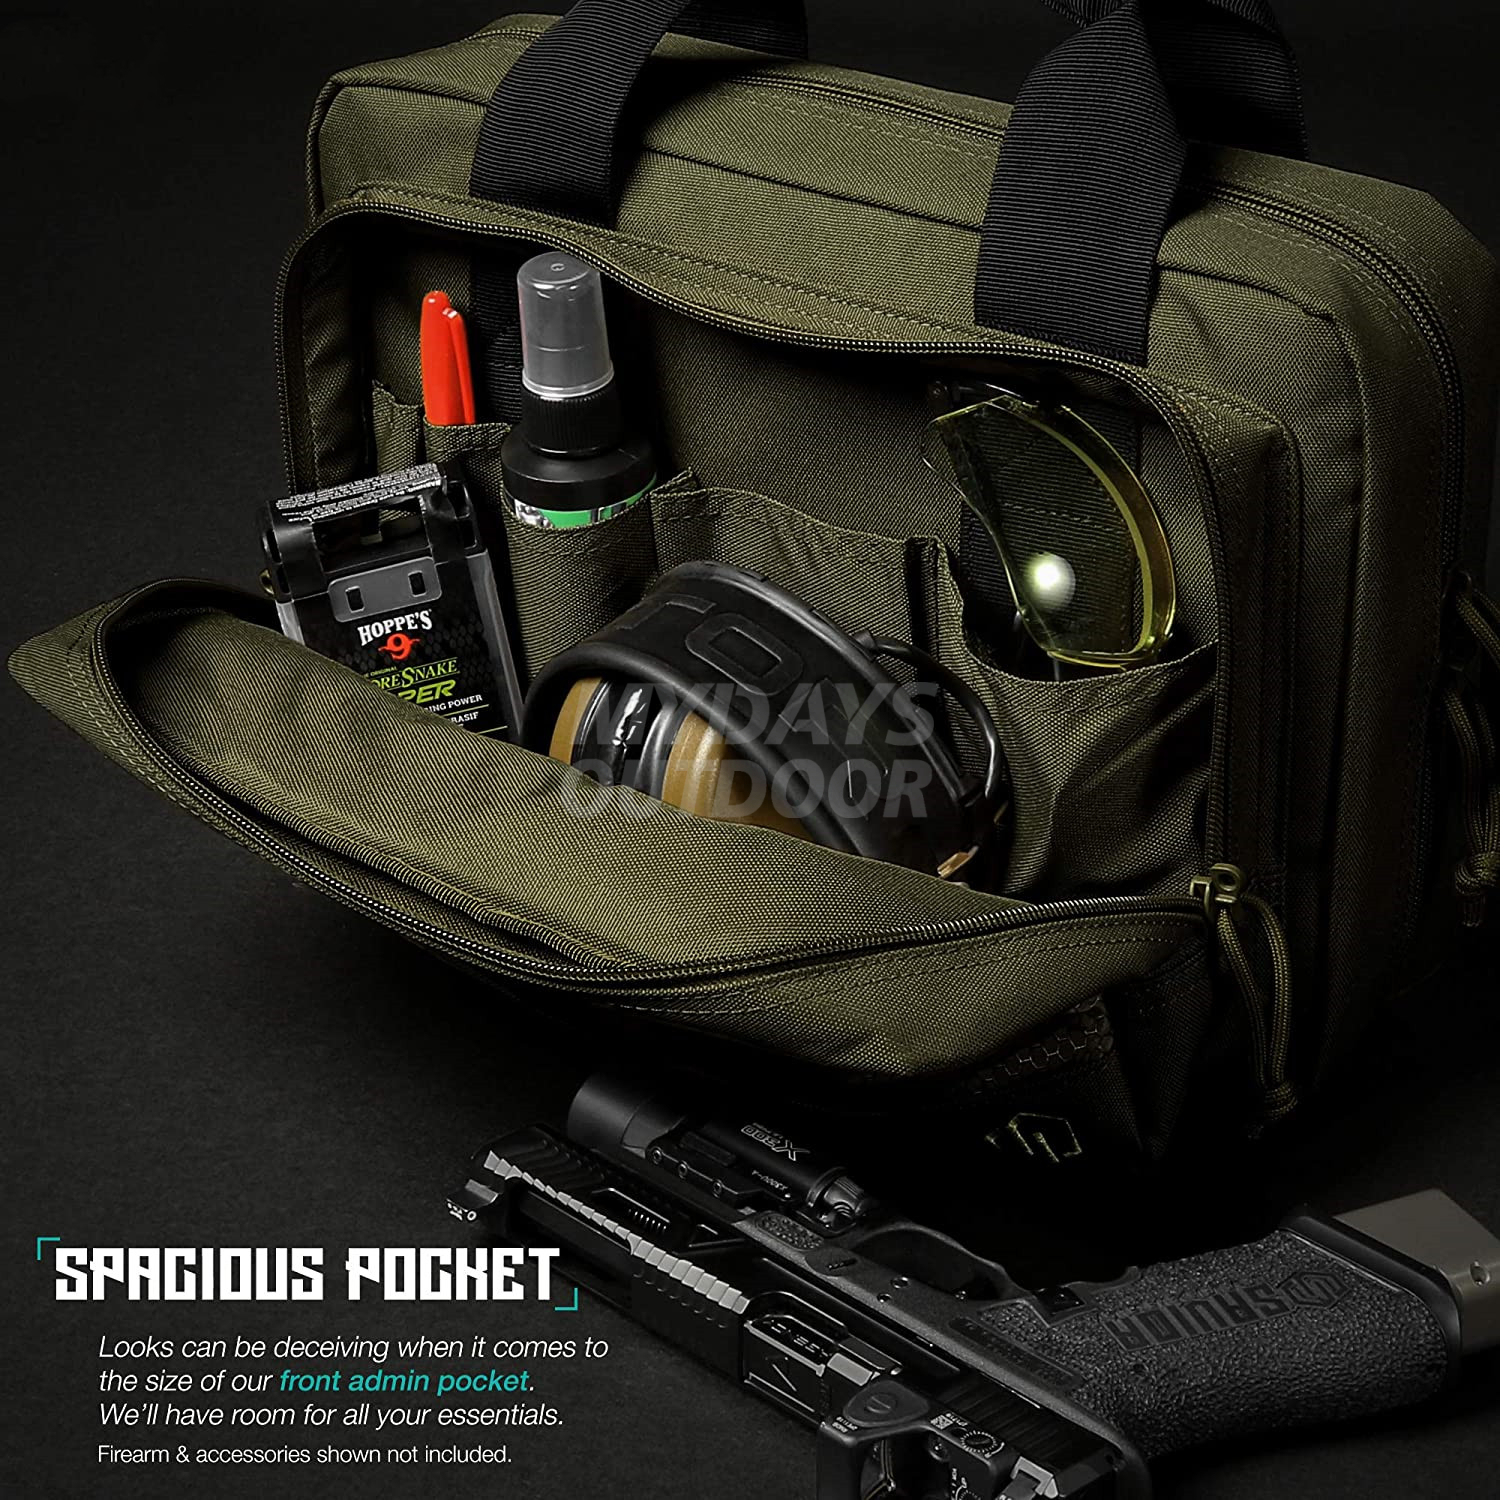 Tactical Double Scoped Handgun Firearm Case Pistol Bag MDSHR-10